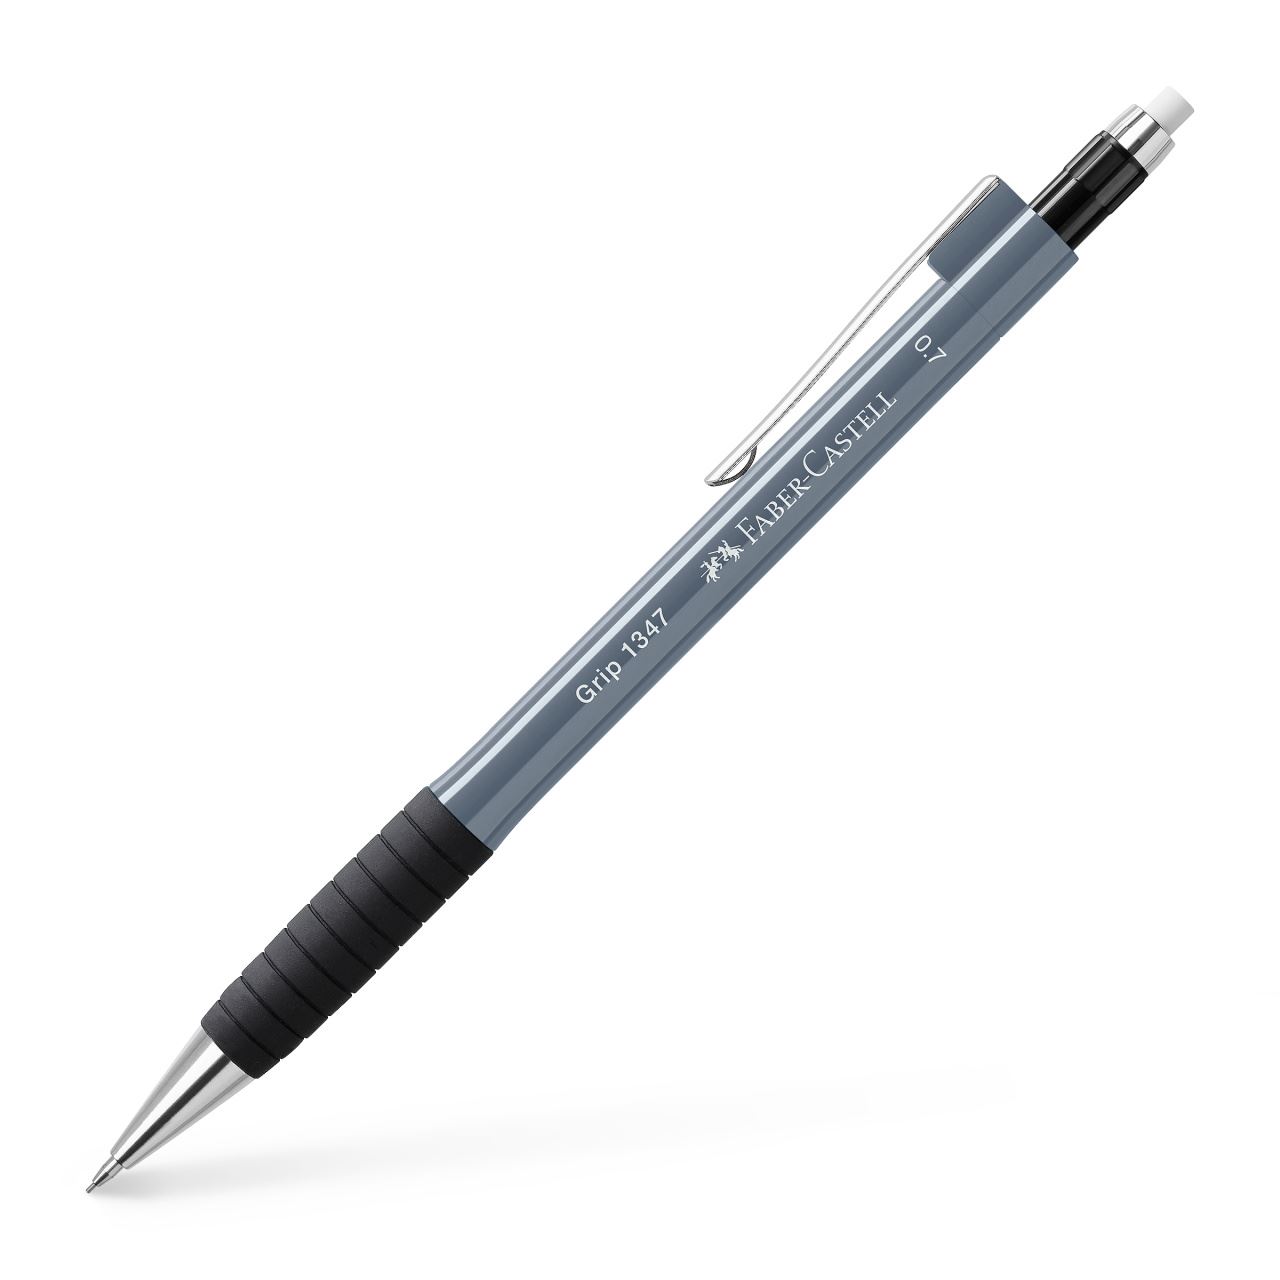 Faber-Castell - Mechanical pencil Grip 1347, 0.7 mm, stone grey